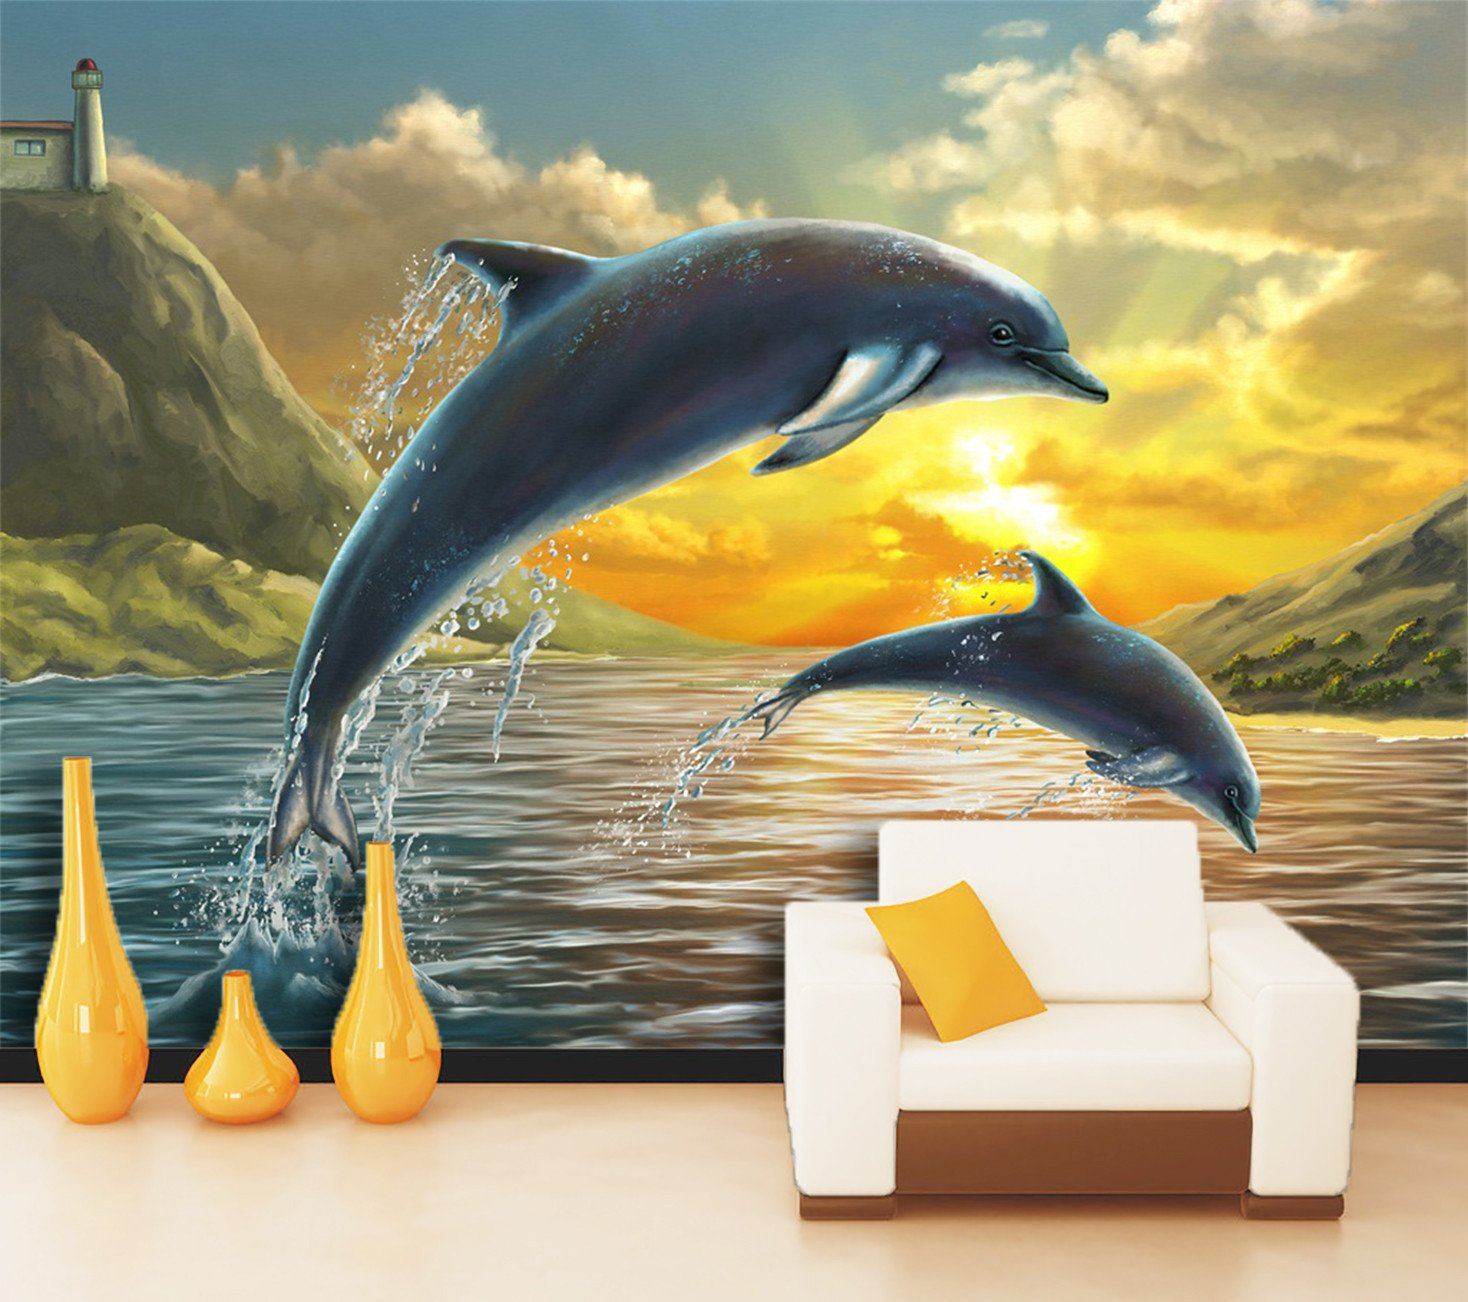 3D Jumping Dolphins 464 Wallpaper AJ Wallpaper 